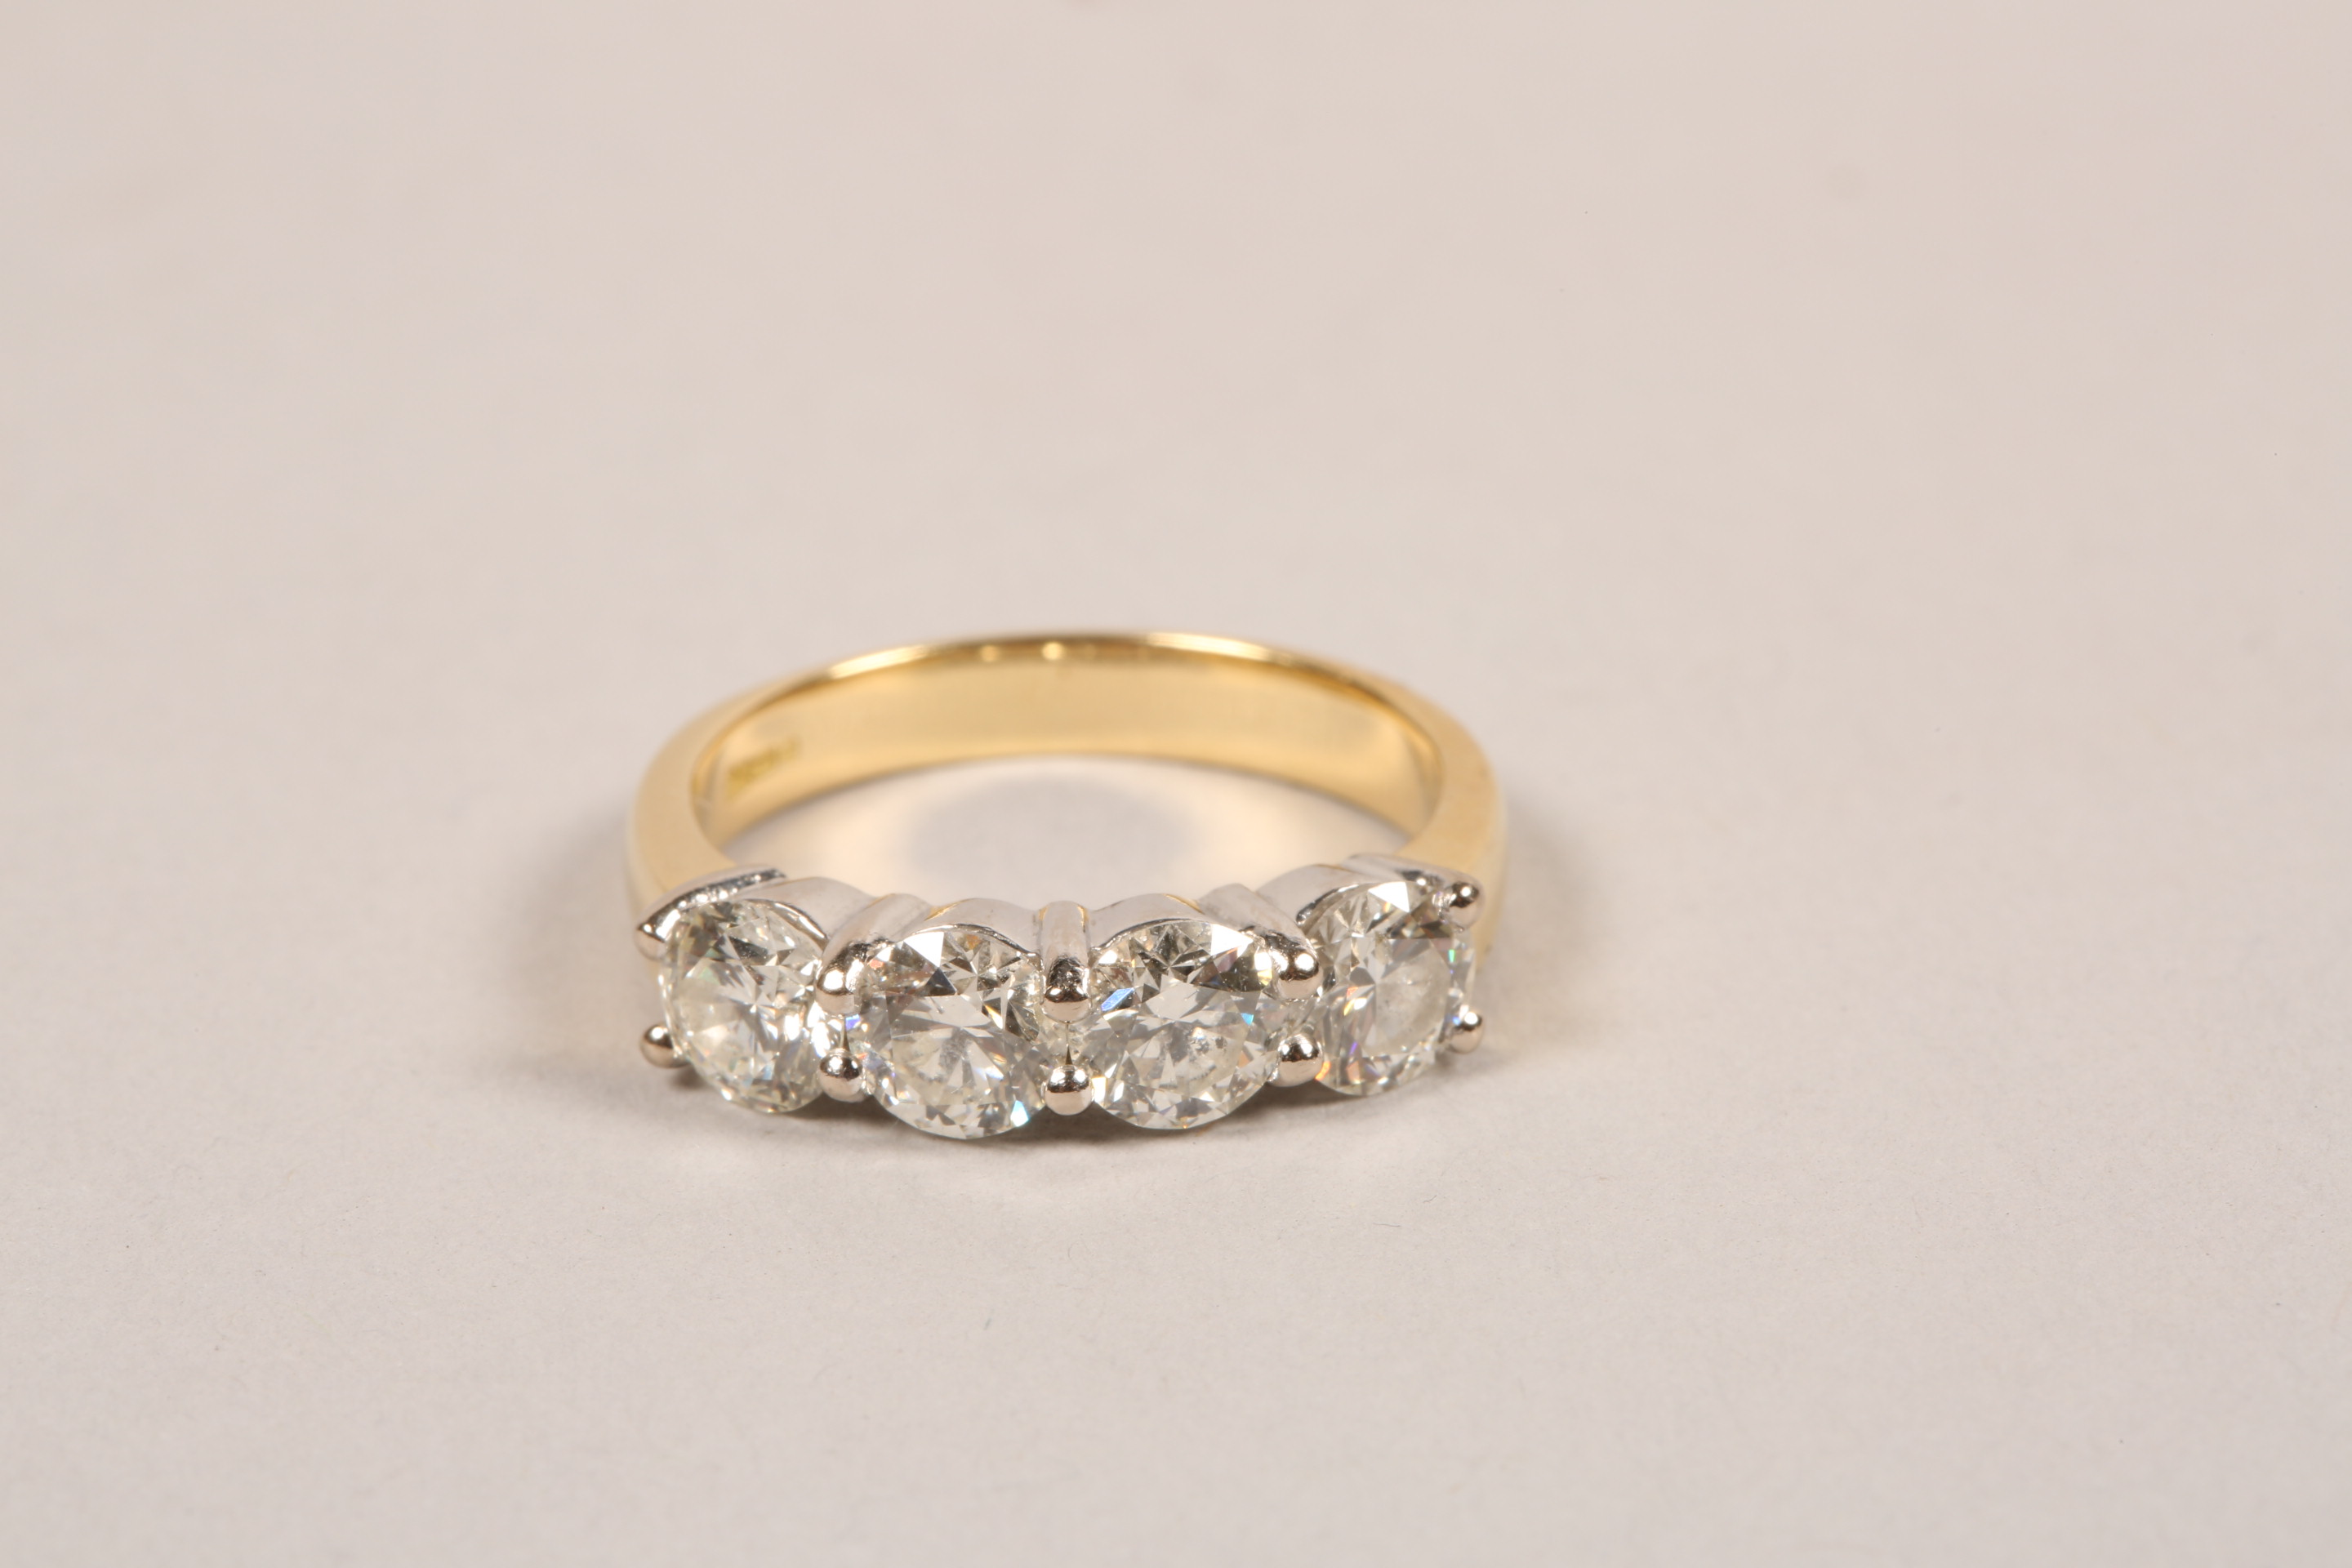 Ladies 18 carat gold four stone diamond ring, four brilliant cut diamonds, diamond weight - Image 3 of 6